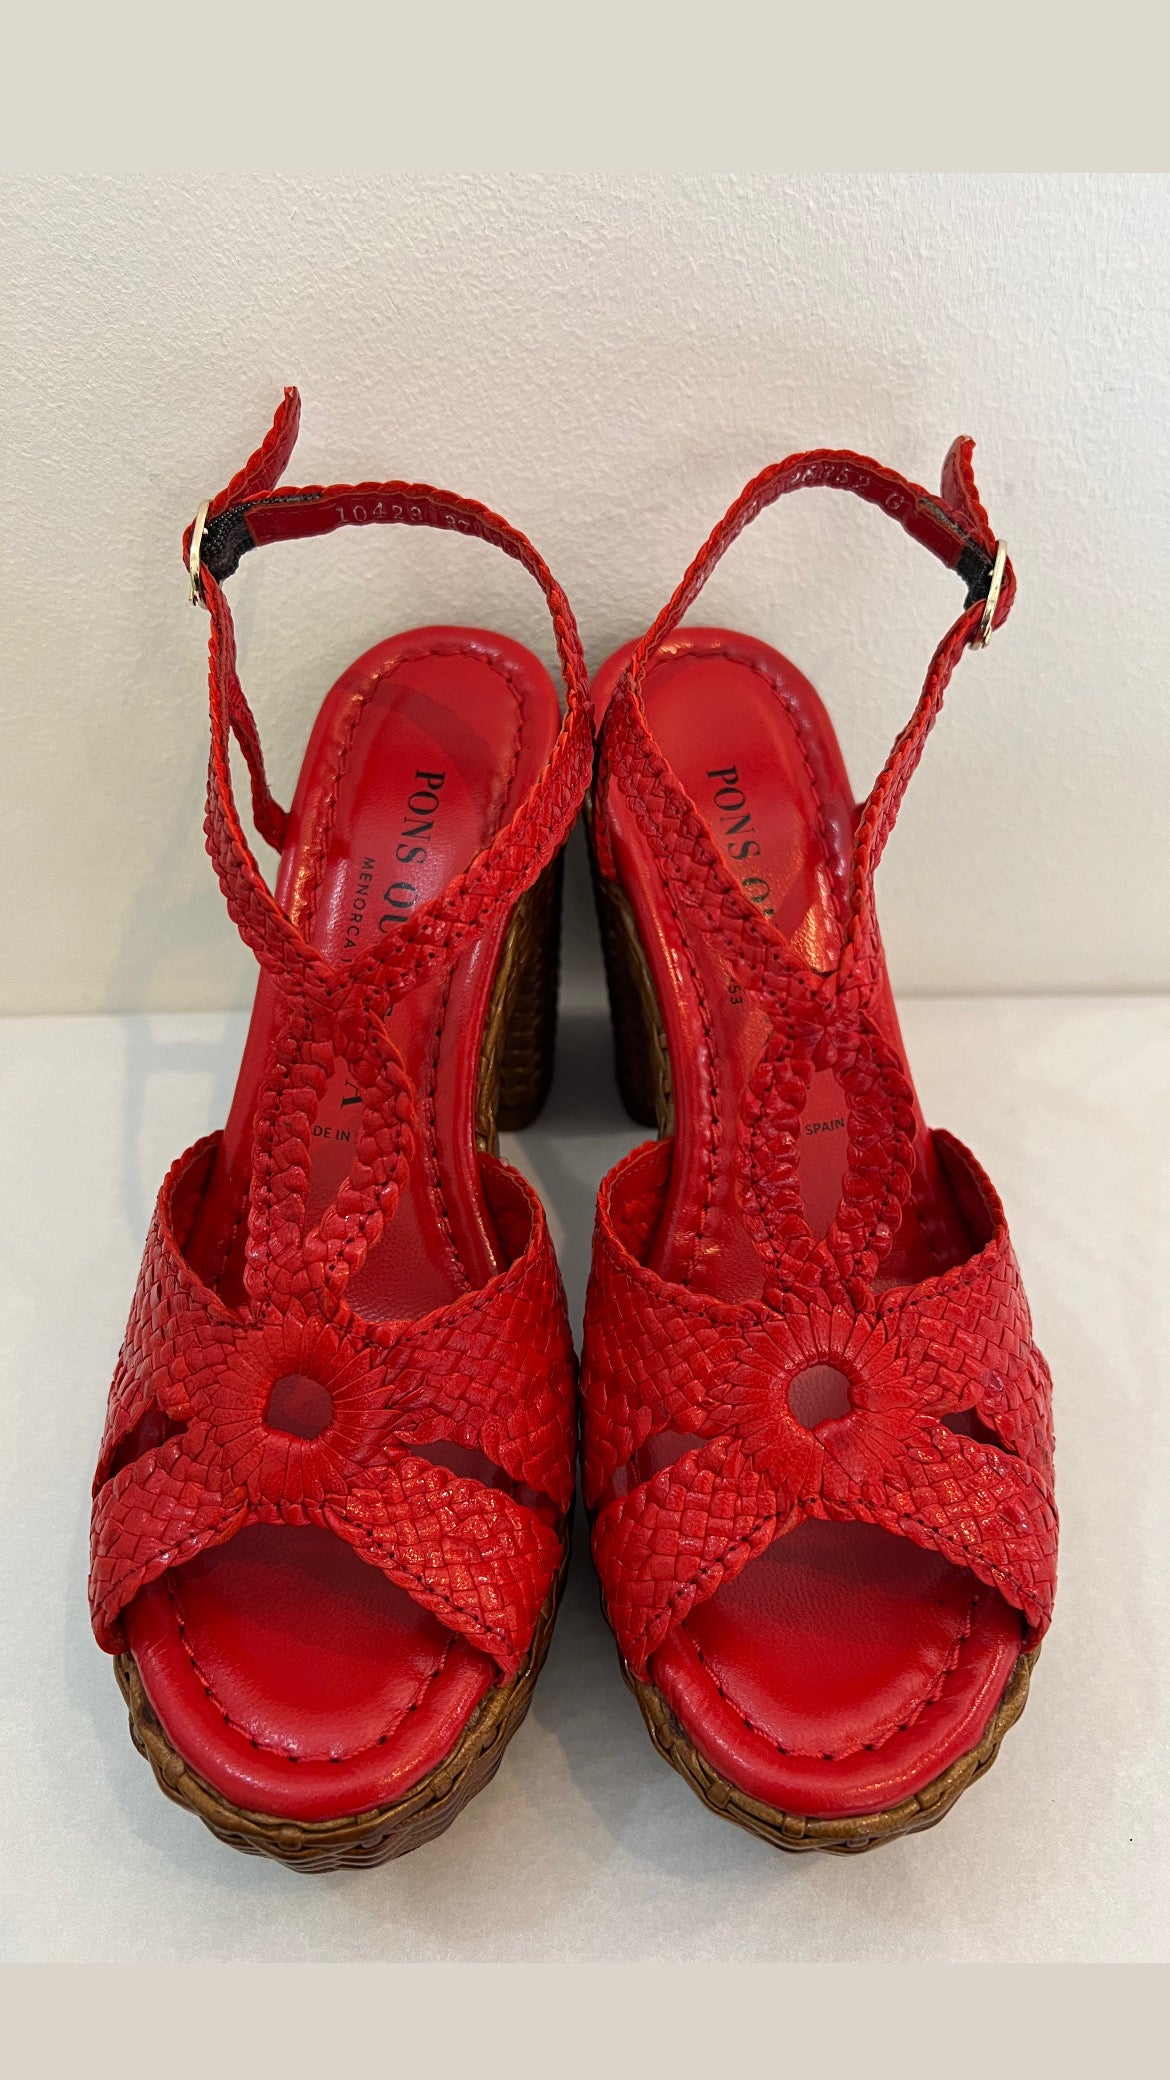 Hetre Alresford Hampshire Shoe Store Pons Quintana Red Woven Platform Sandal